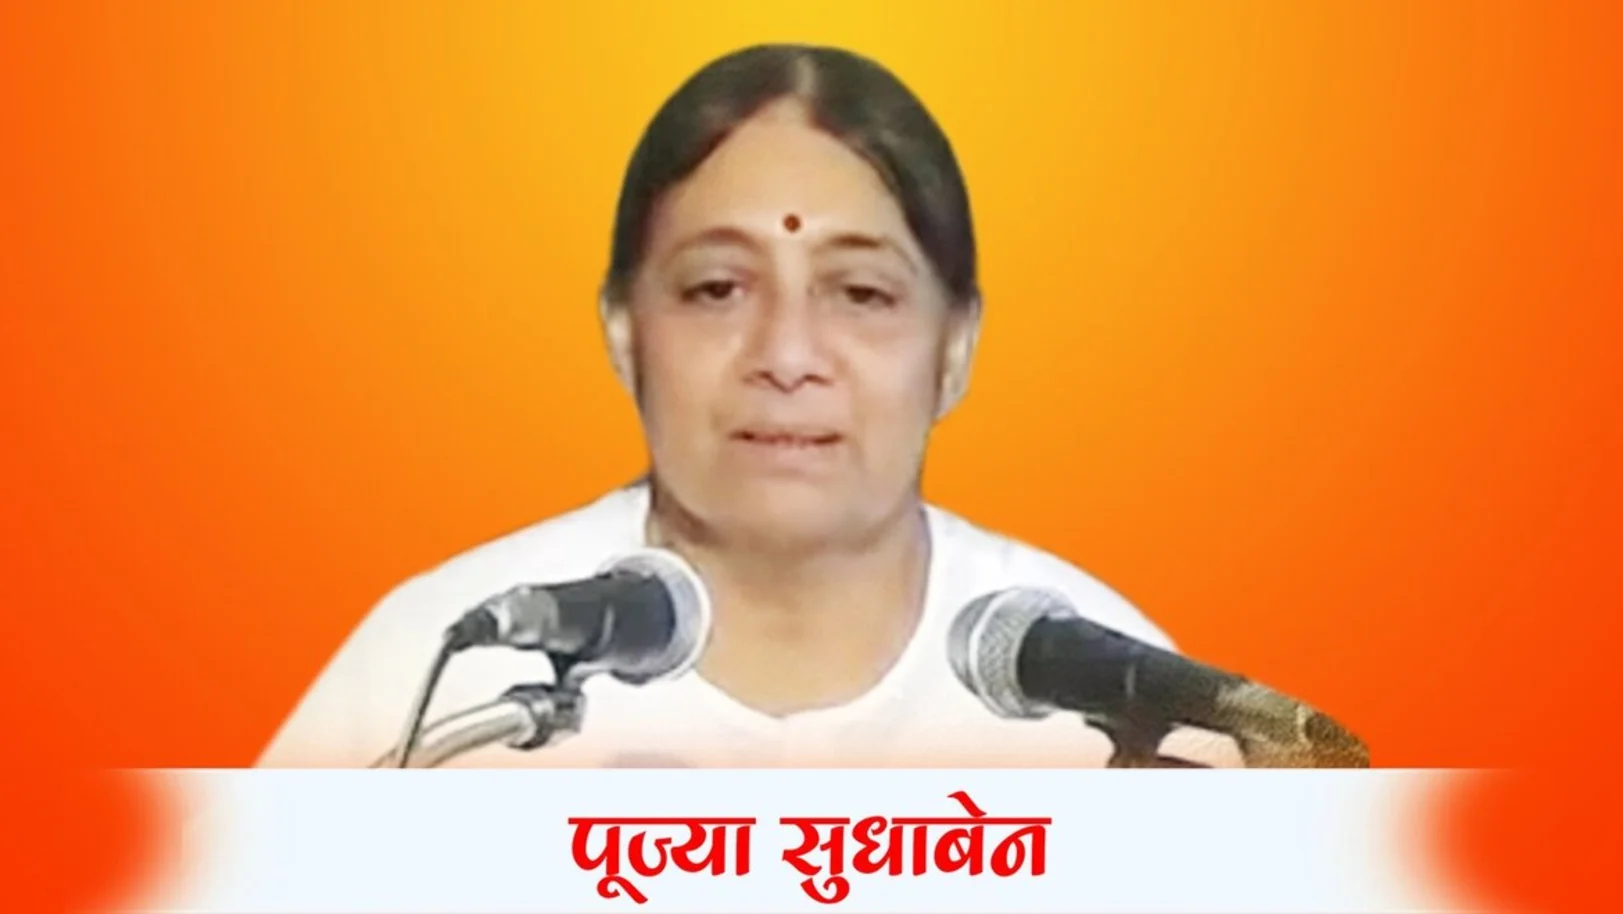 Pujya Sudhaben Streaming Now On Dharm Sandesh